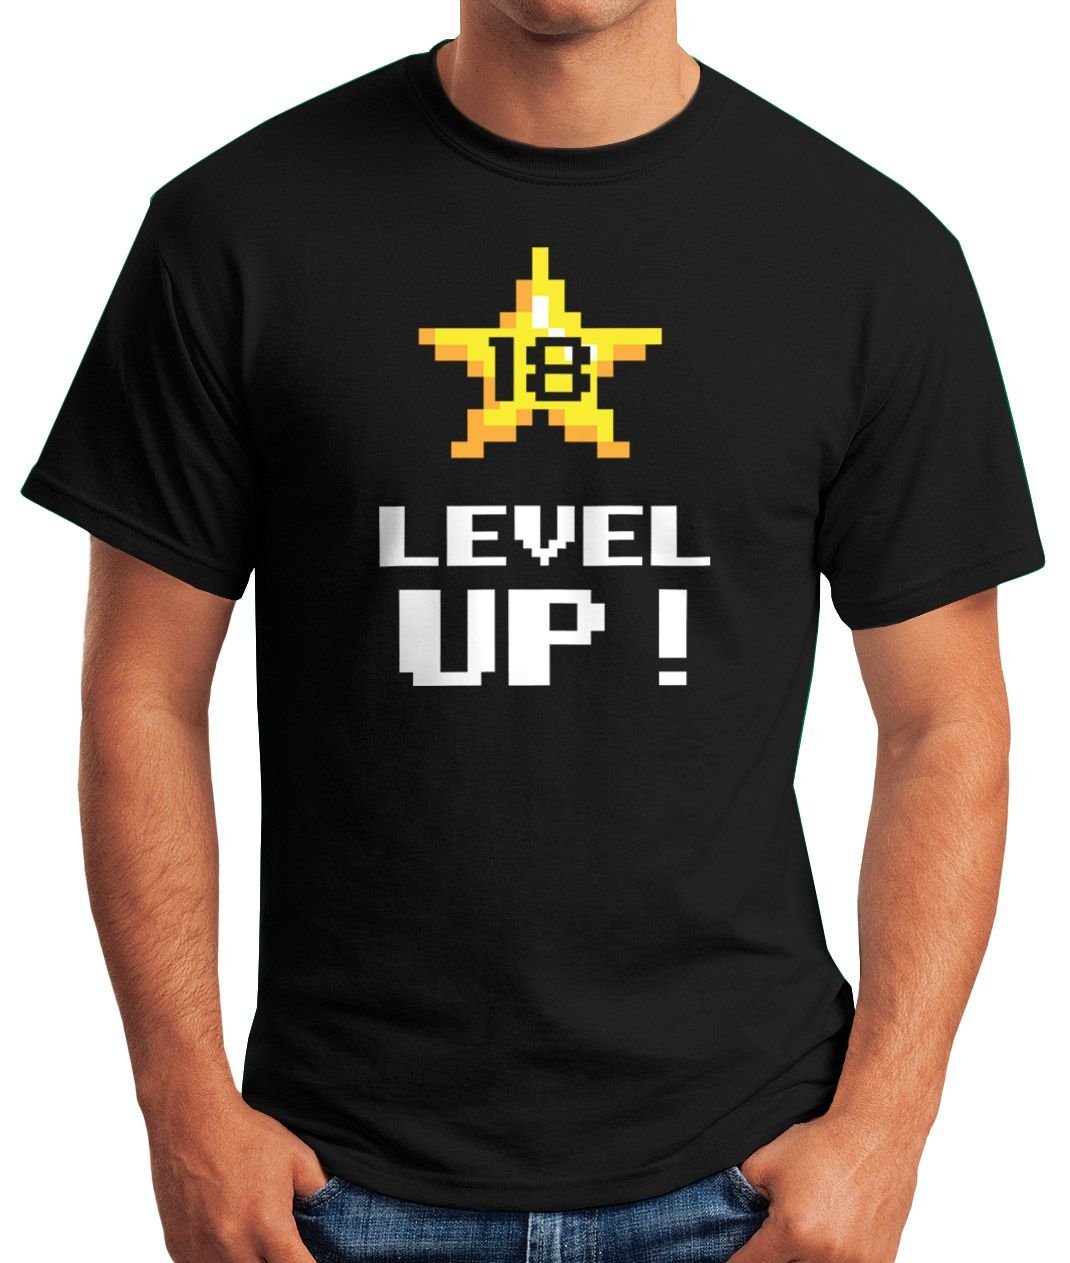 Pixelgrafik Herren Geschenk Geburtstag MoonWorks Gamer Fun-Shirt Pixel-Stern Up 18 Arcade Moonworks® Print schwarz Print-Shirt mit Level T-Shirt Retro